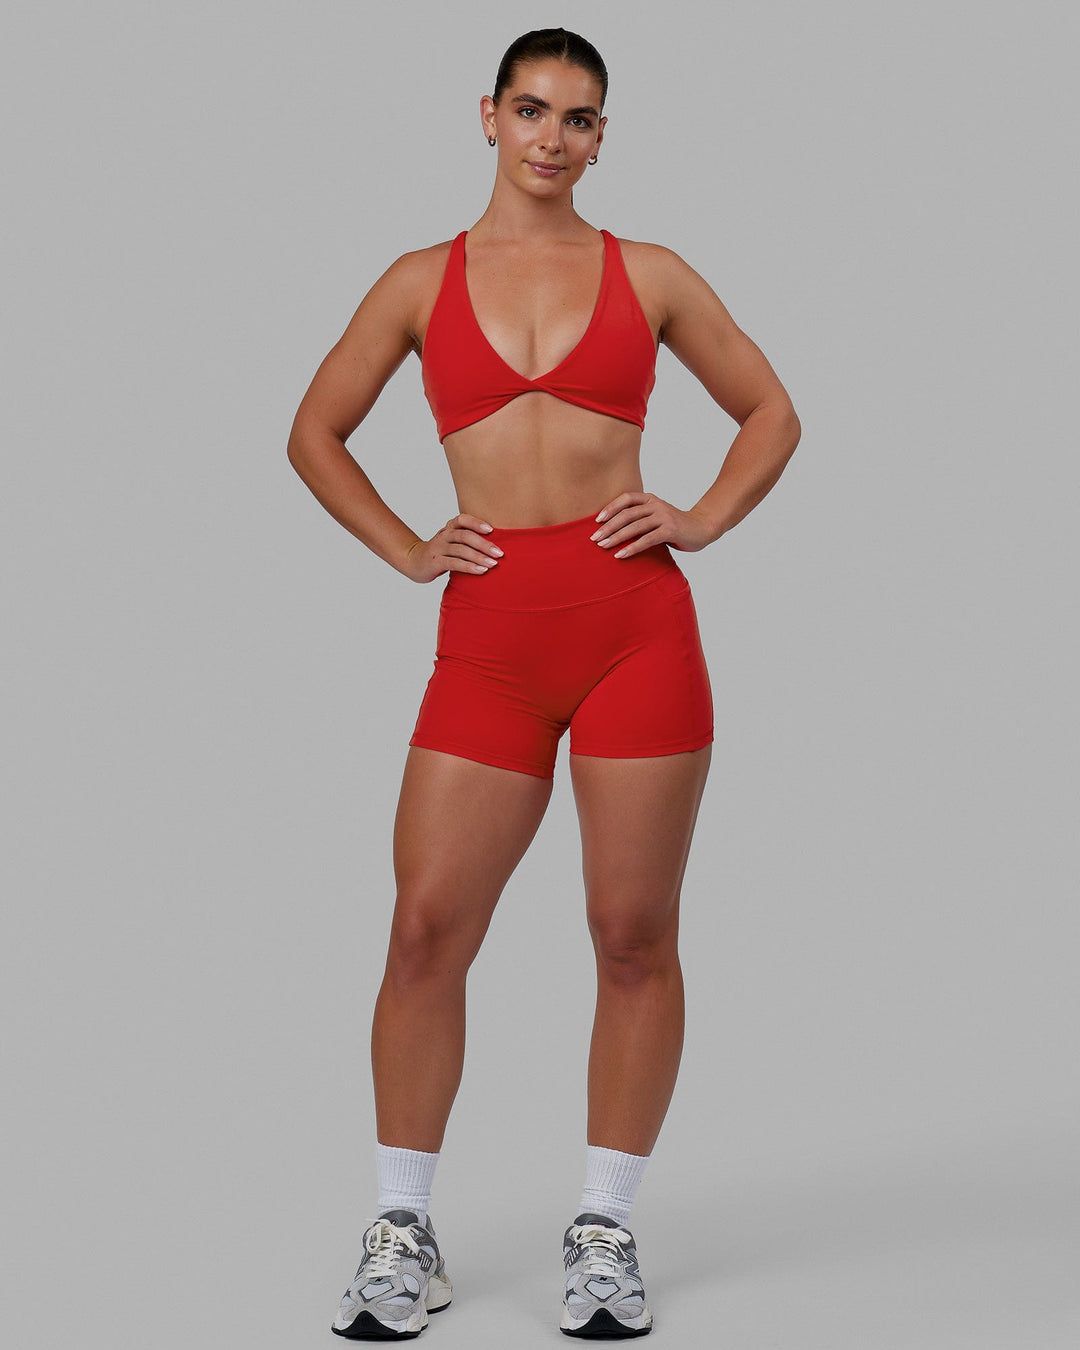 Woman wearing Agile Sports Bra - Infrared